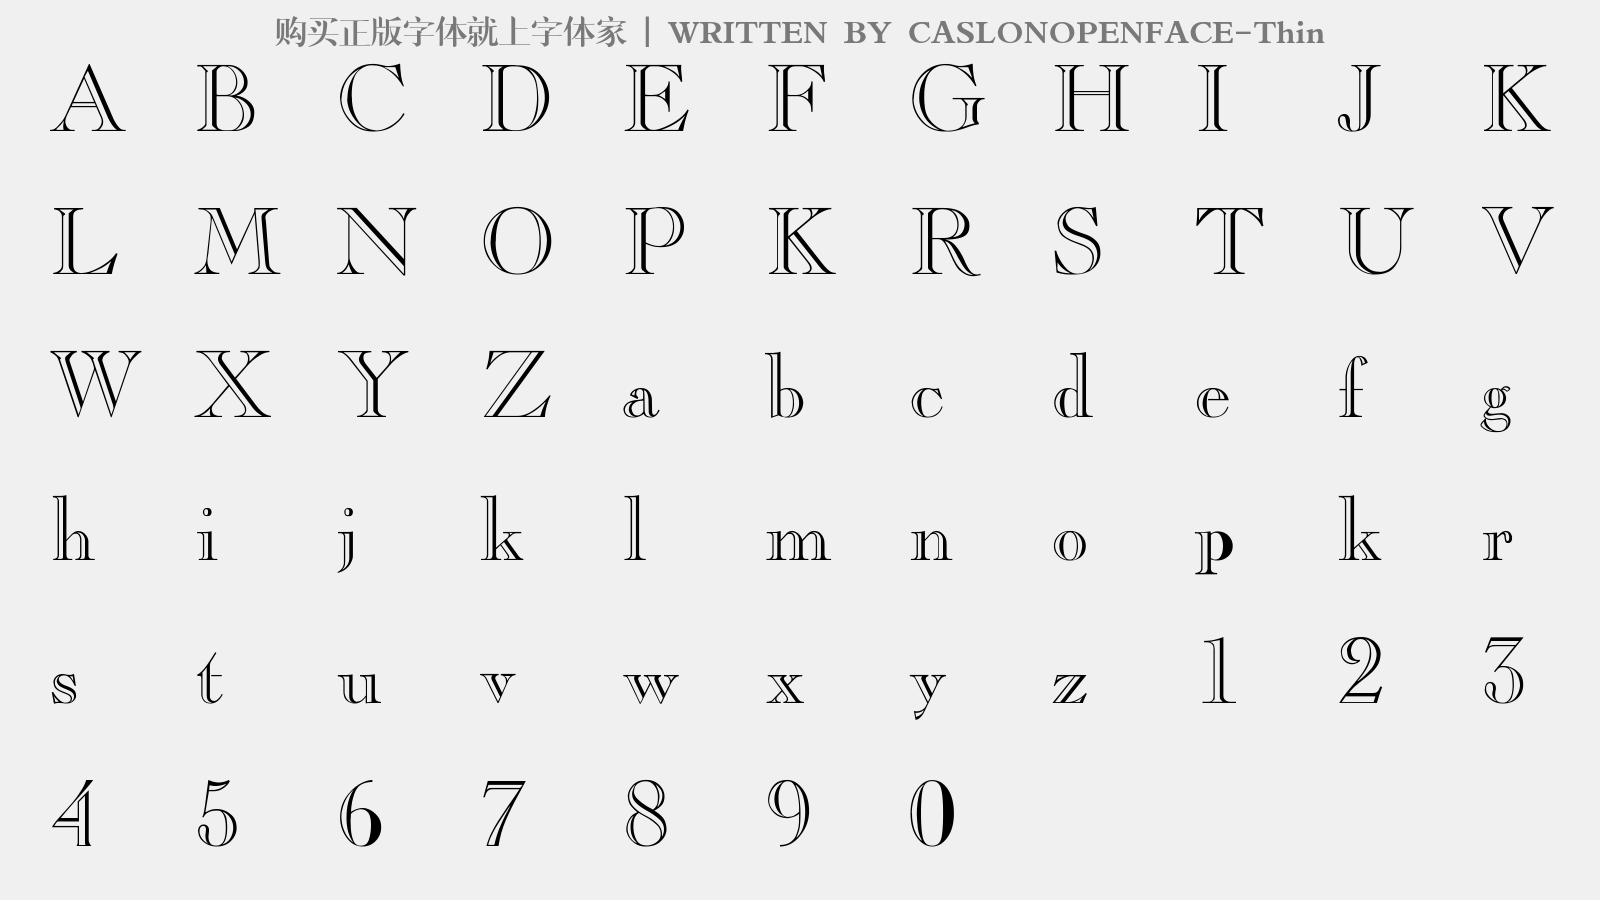 CASLONOPENFACE-Thin - 大写字母/小写字母/数字